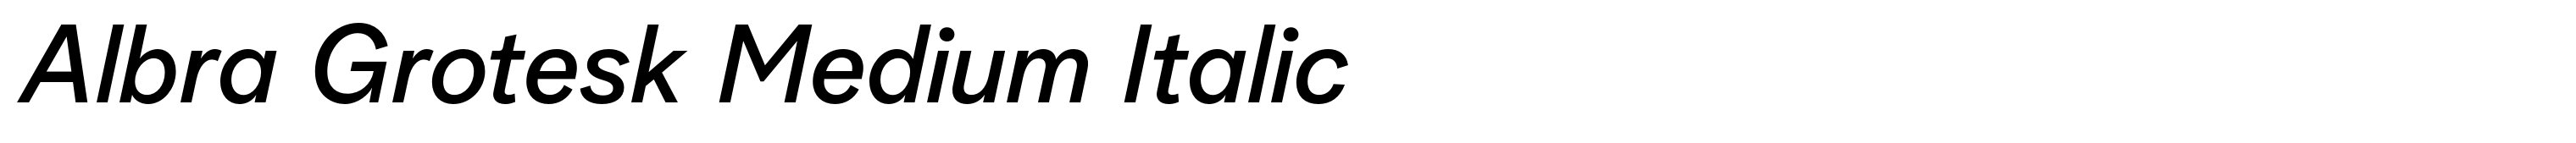 Albra Grotesk Medium Italic